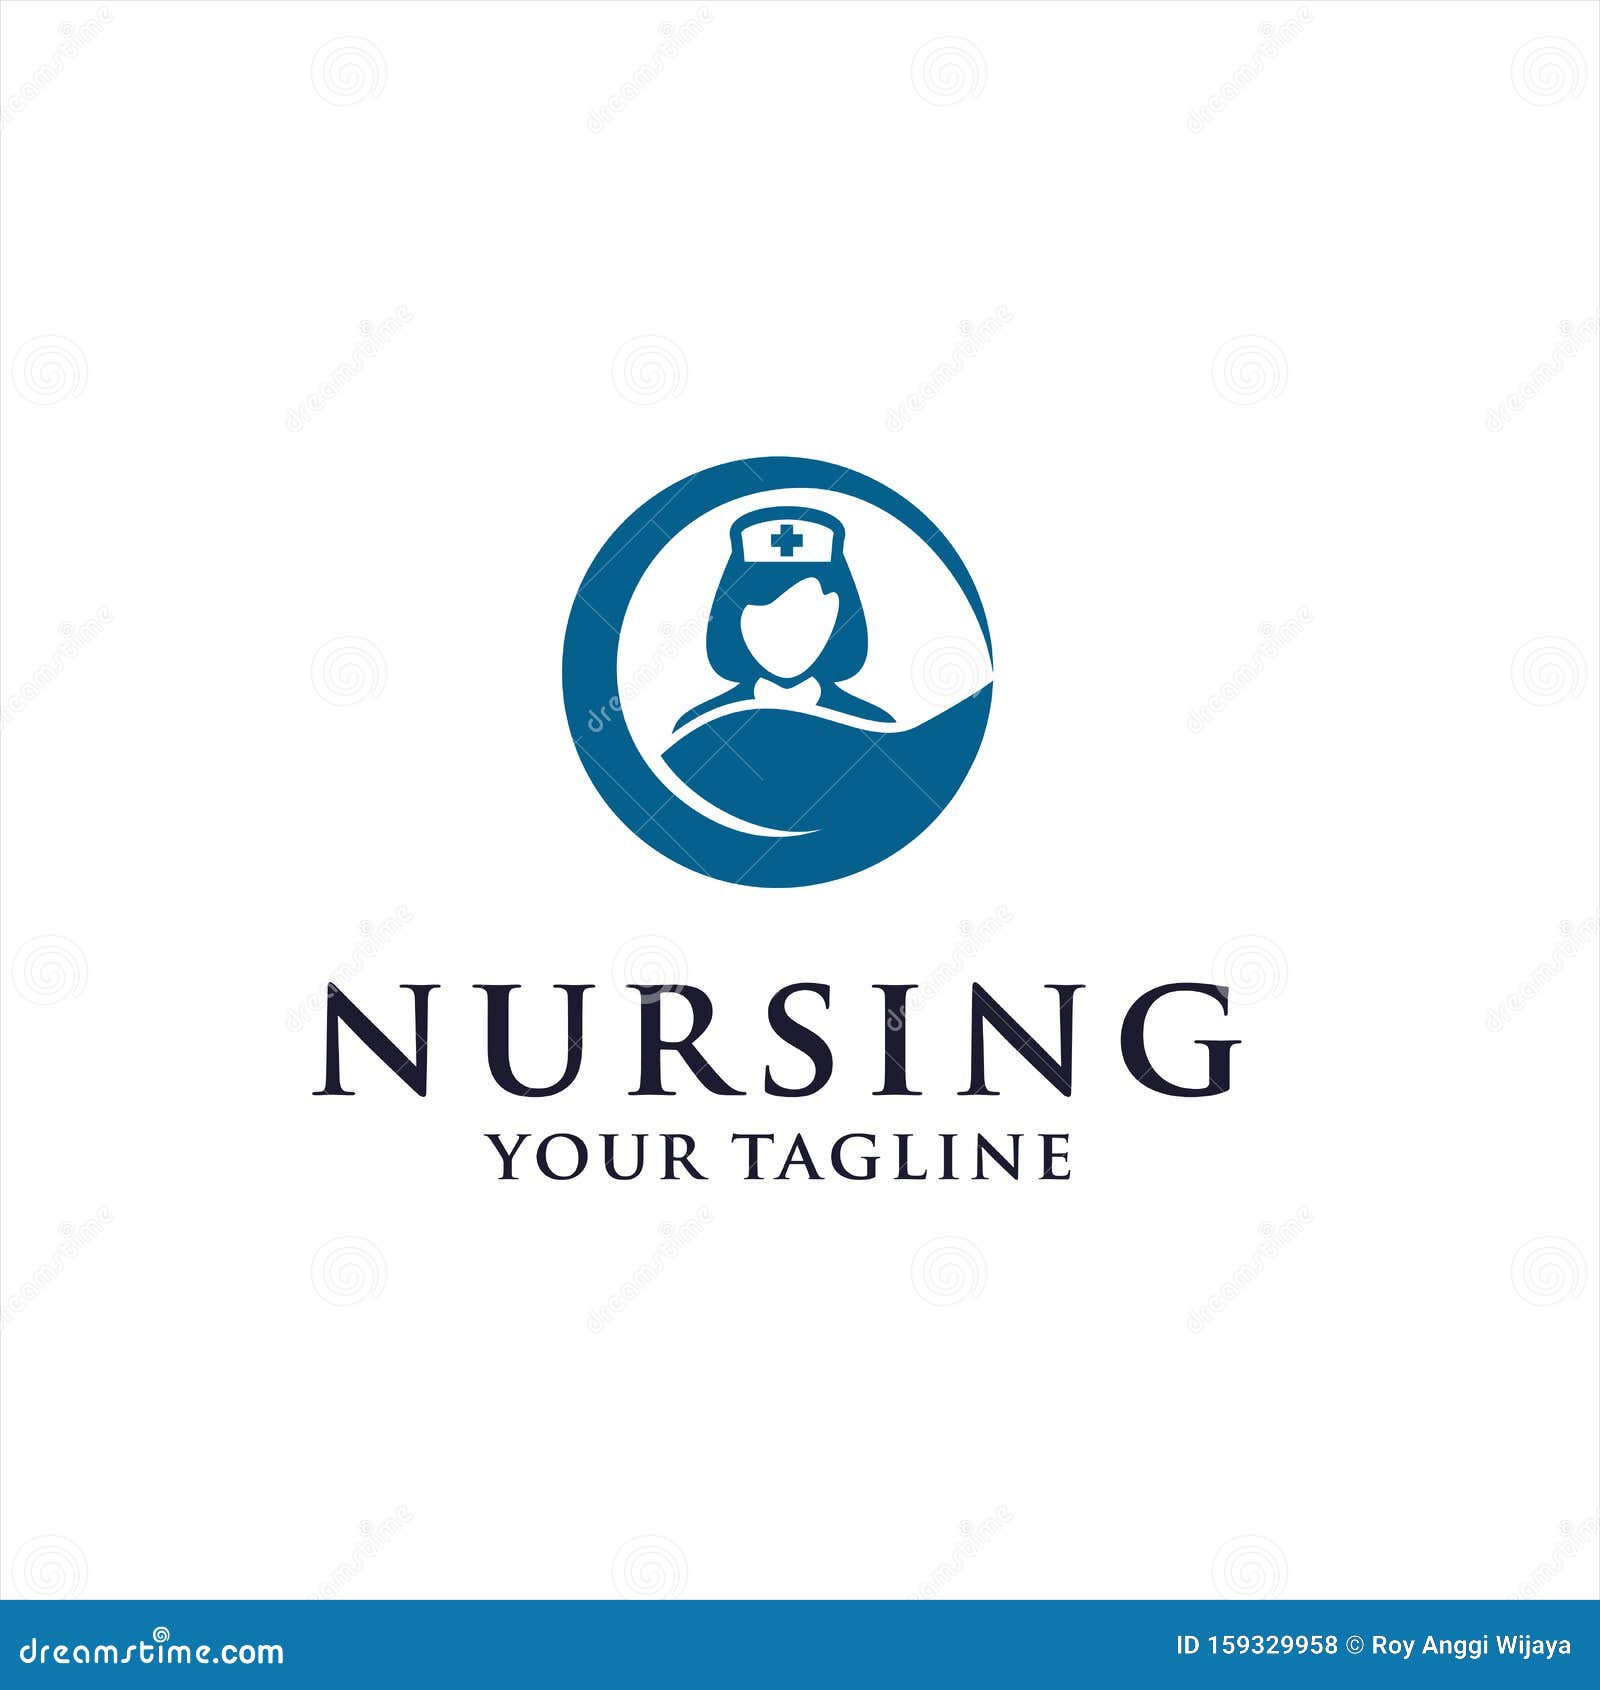 nursing logo ideas 3